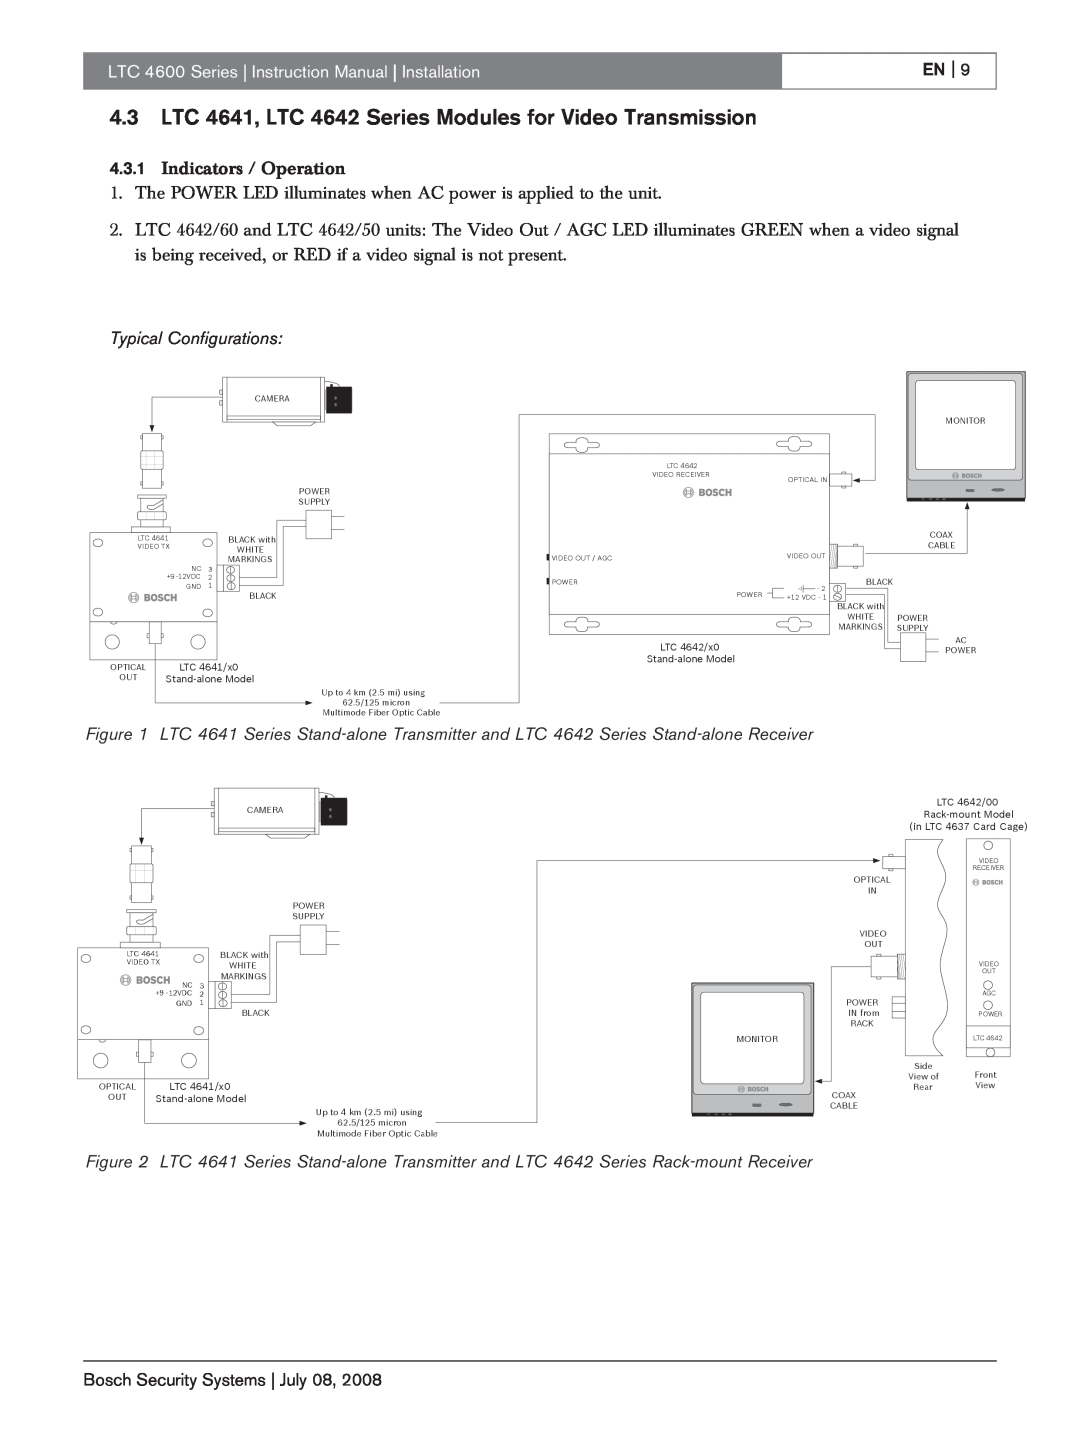 Bosch Appliances LTC 4600 instruction manual En, 4.3.1Indicators / Operation, Bosch Security Systems July 